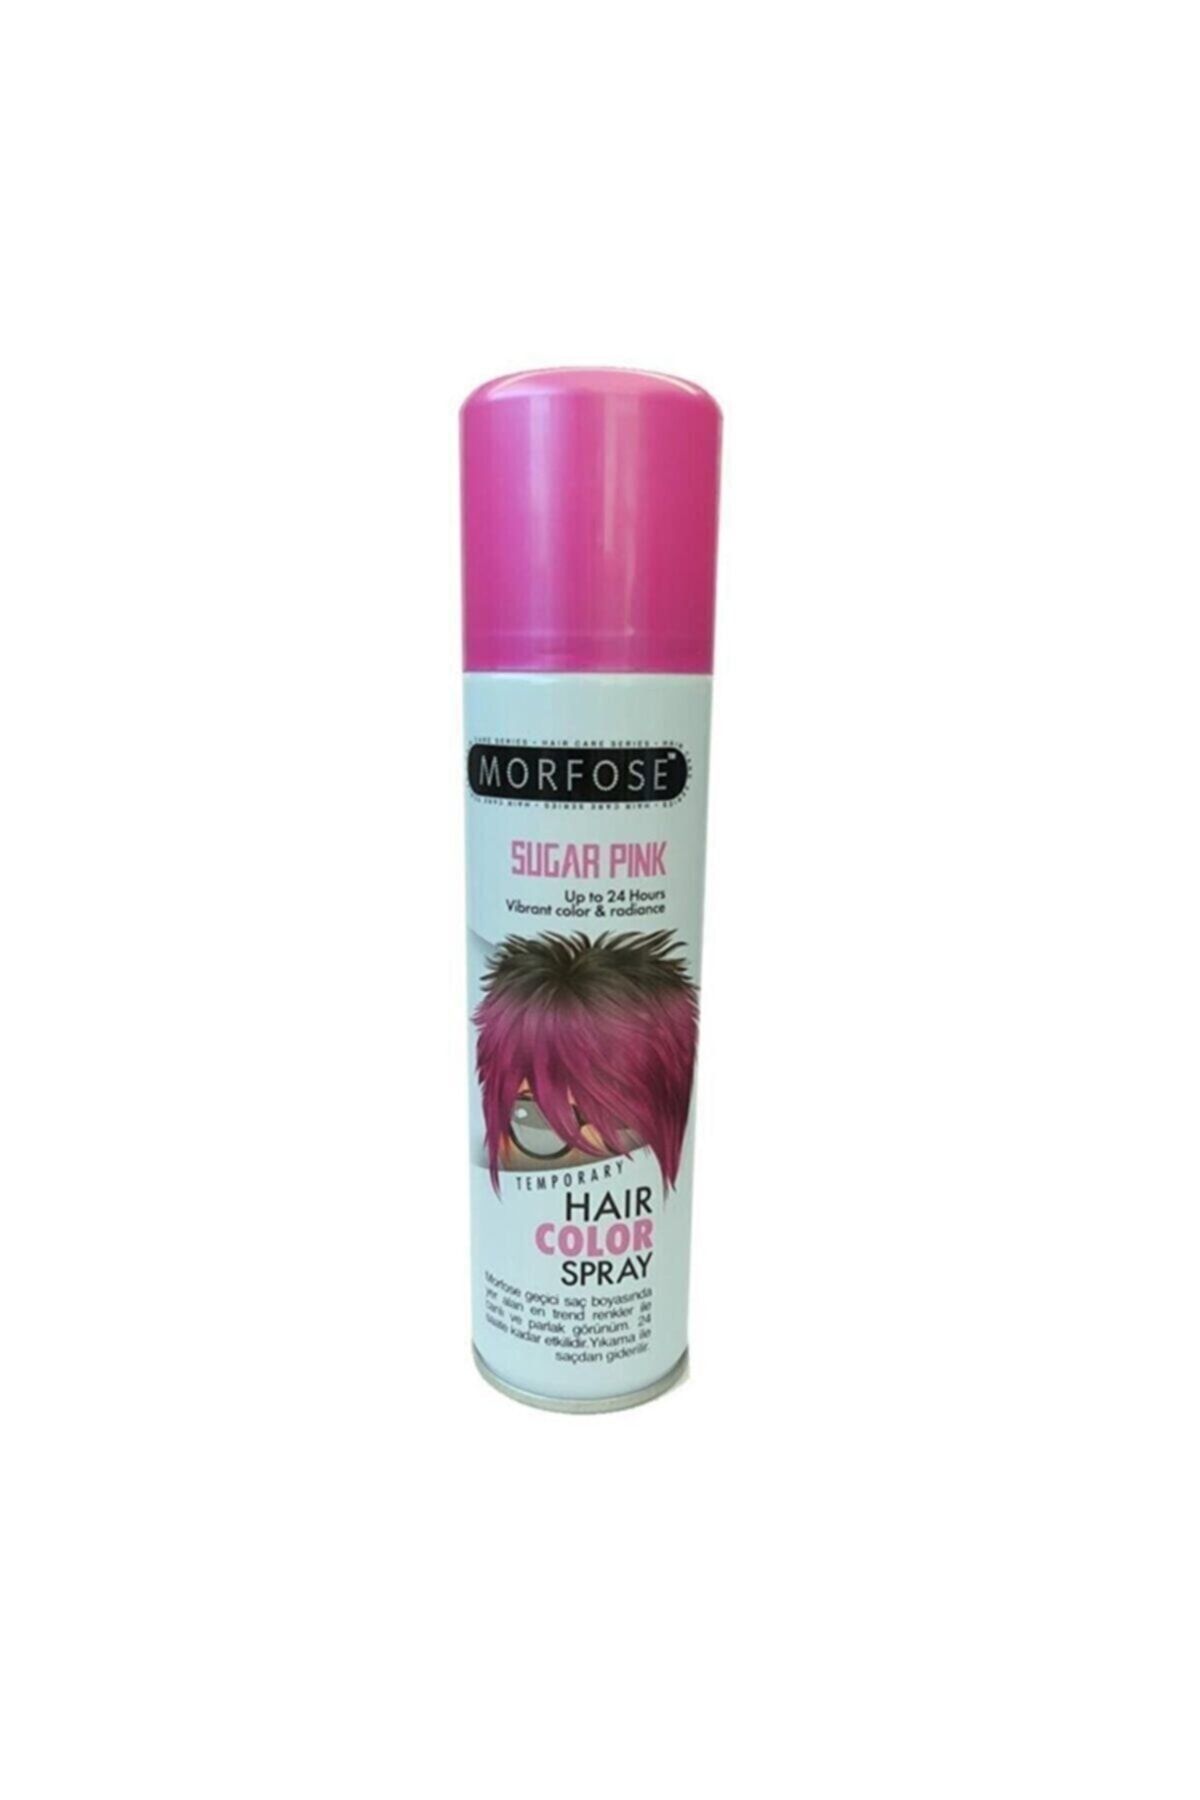 Morfose Hair Color Spray 150ml Sugar Pink Renkli Saç Spreyi